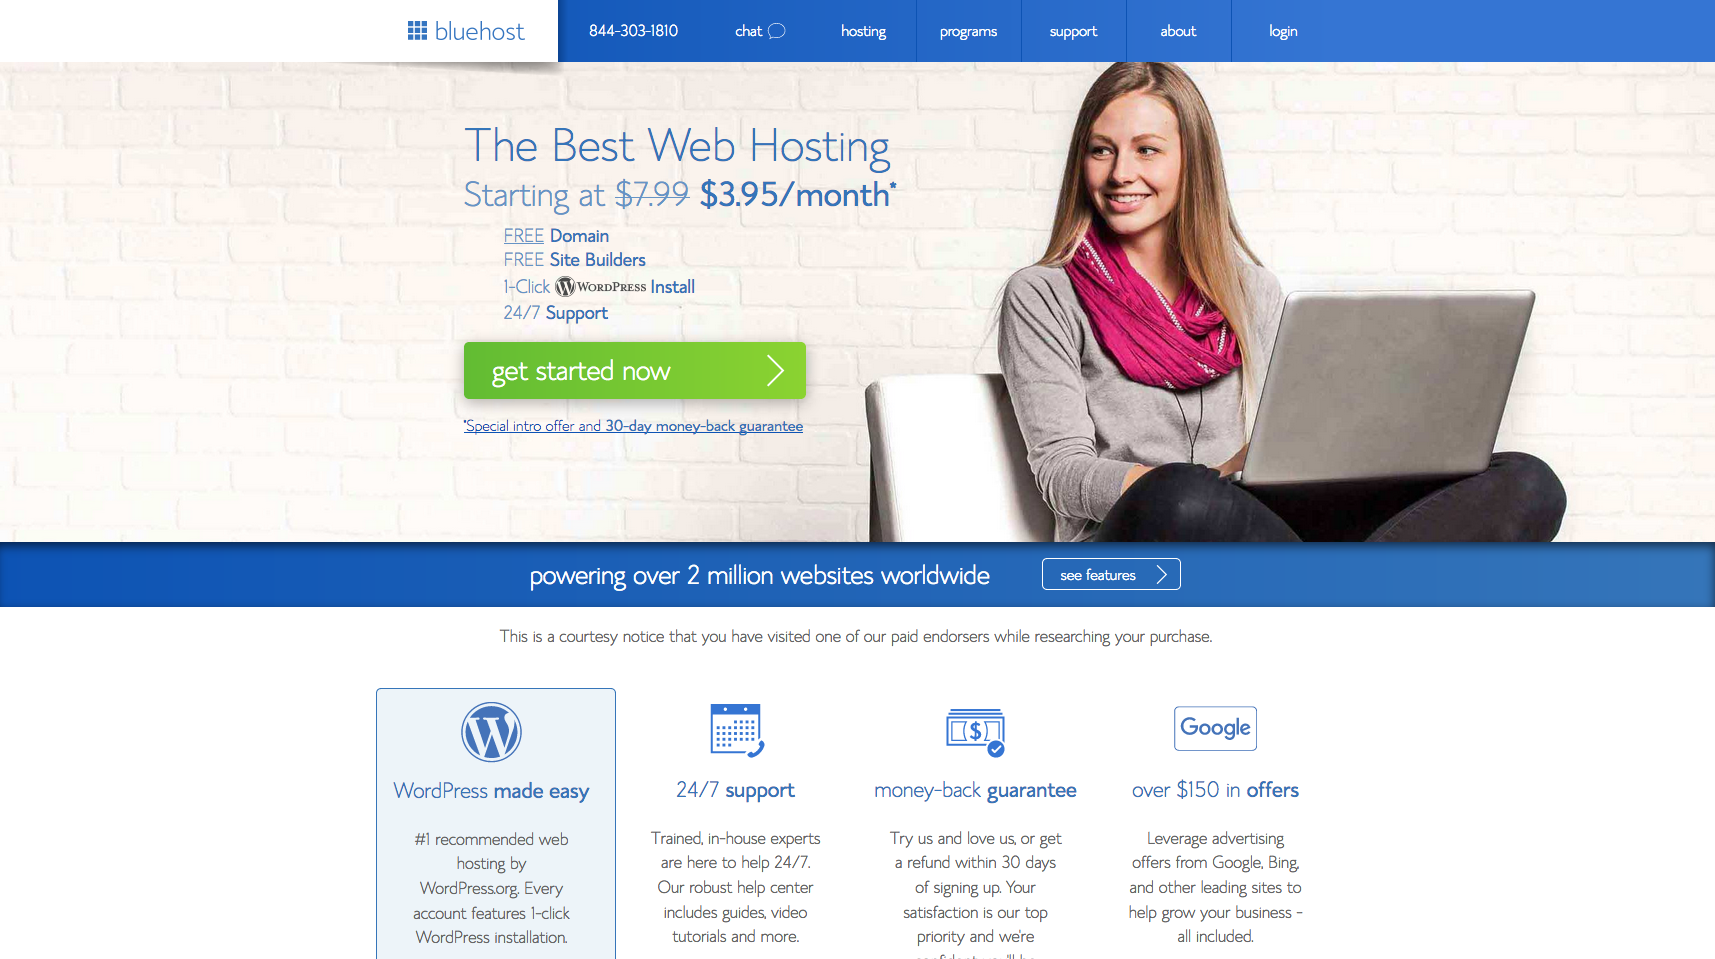 Bluehost best web hosting